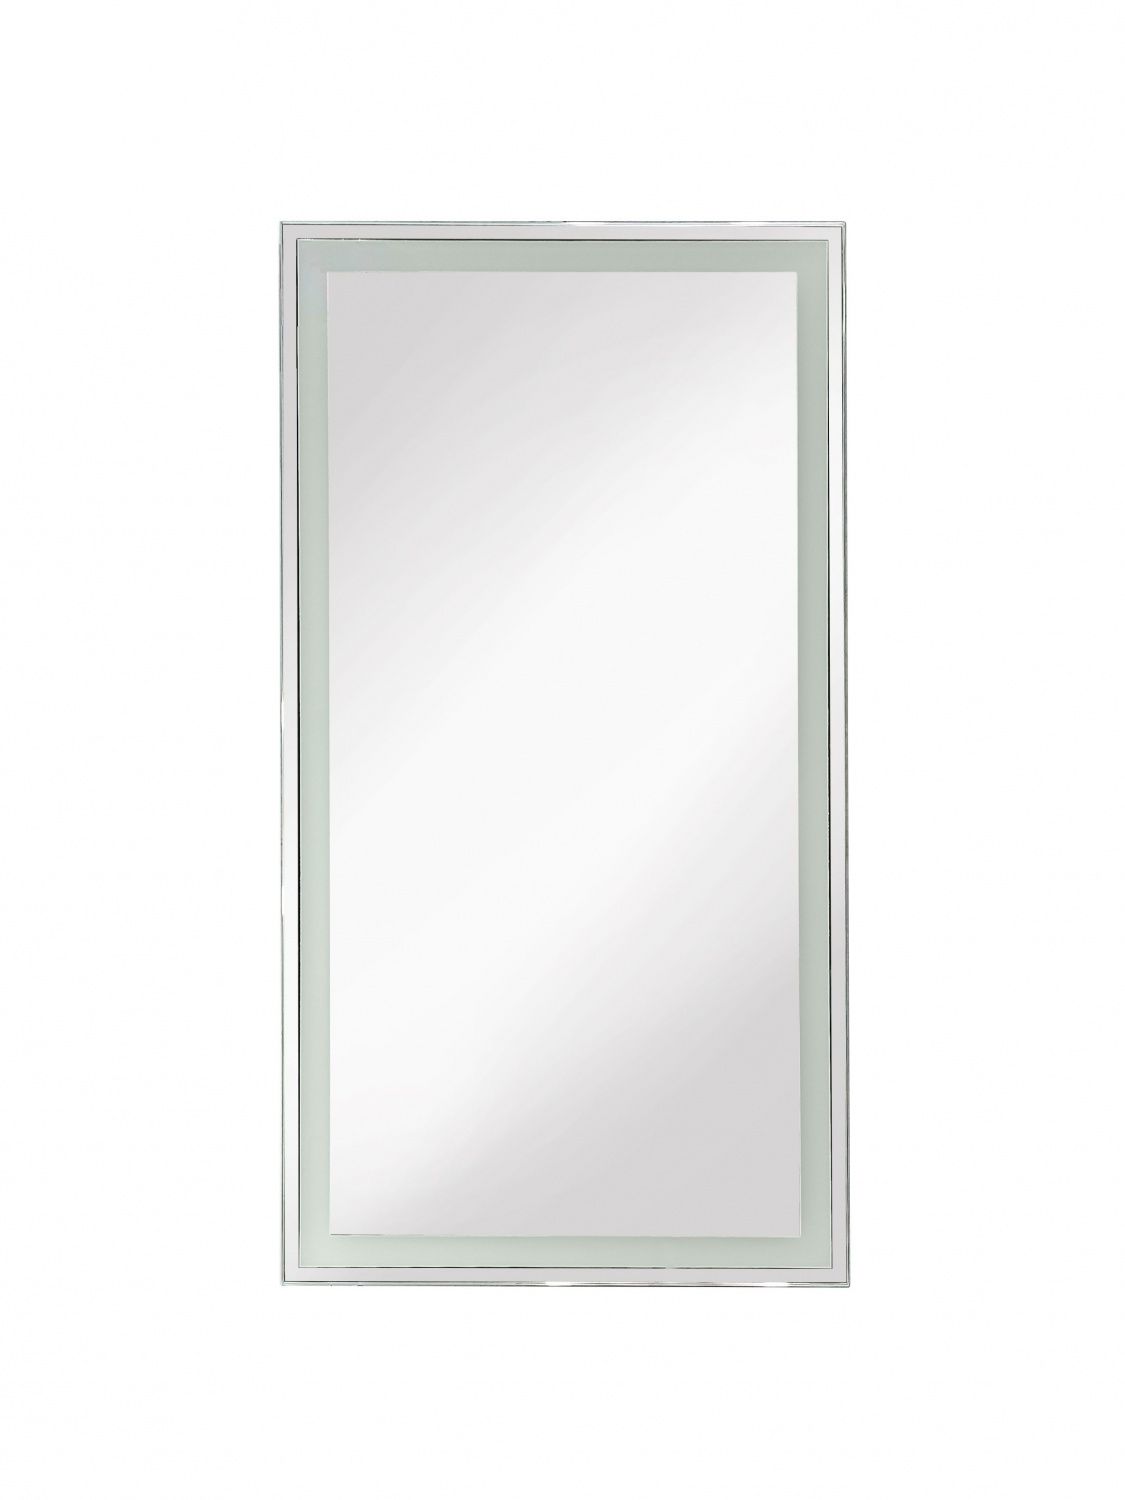 Зеркальный шкаф Art&Max Techno 35x65 AM-Tec-350-650-1D-R-DS-F с подсветкой, белый глянцевый